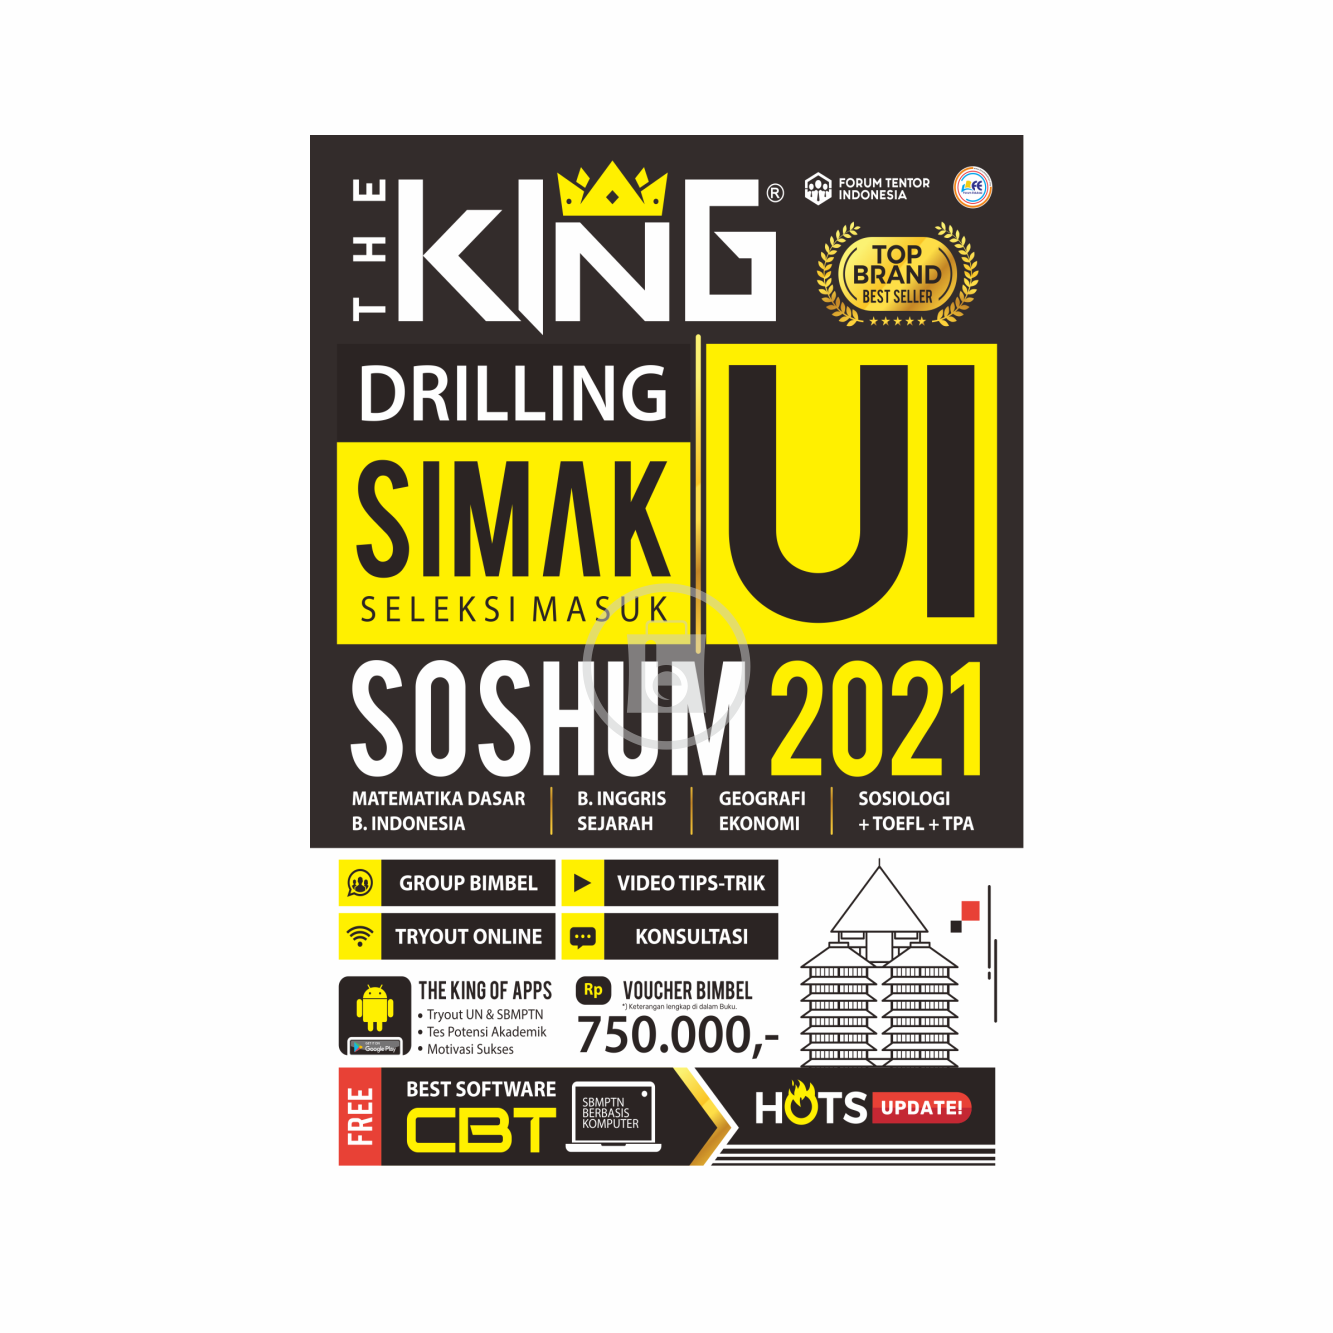 The King Drilling SIMAK UI Soshum 2021